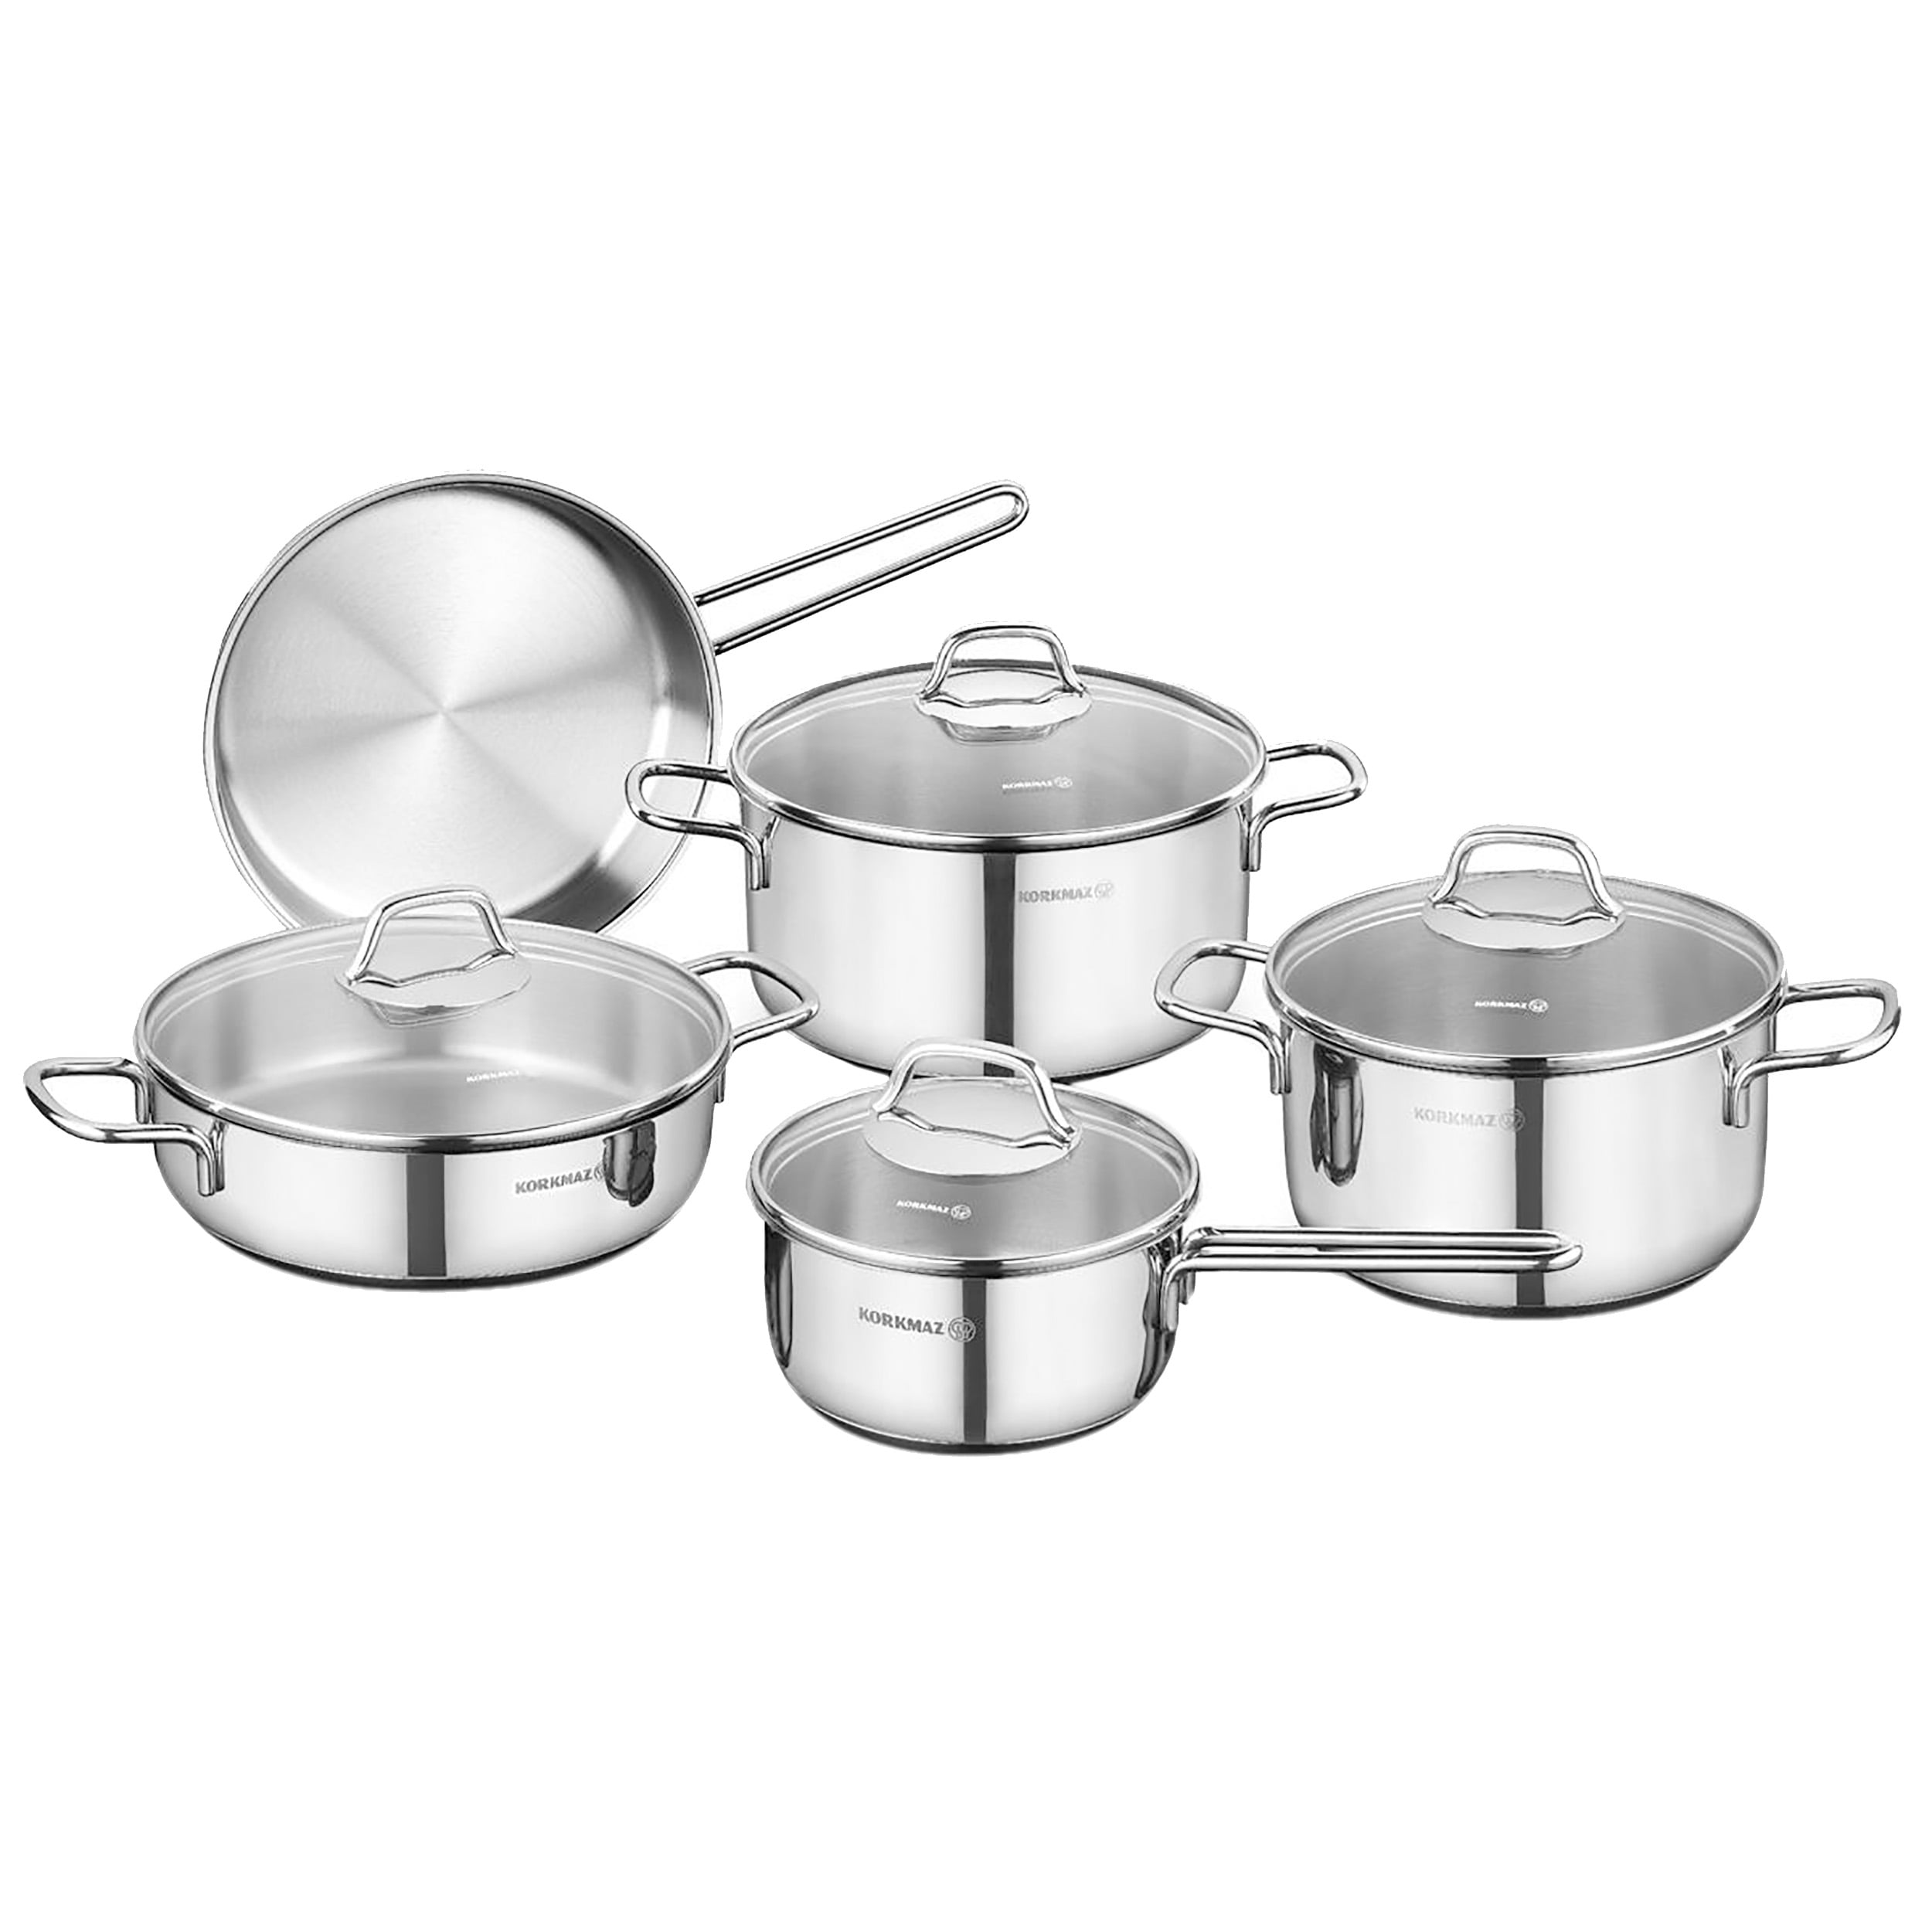 Korkmaz Perla 9 Piece Stainless Steel Cookware Set in Silver